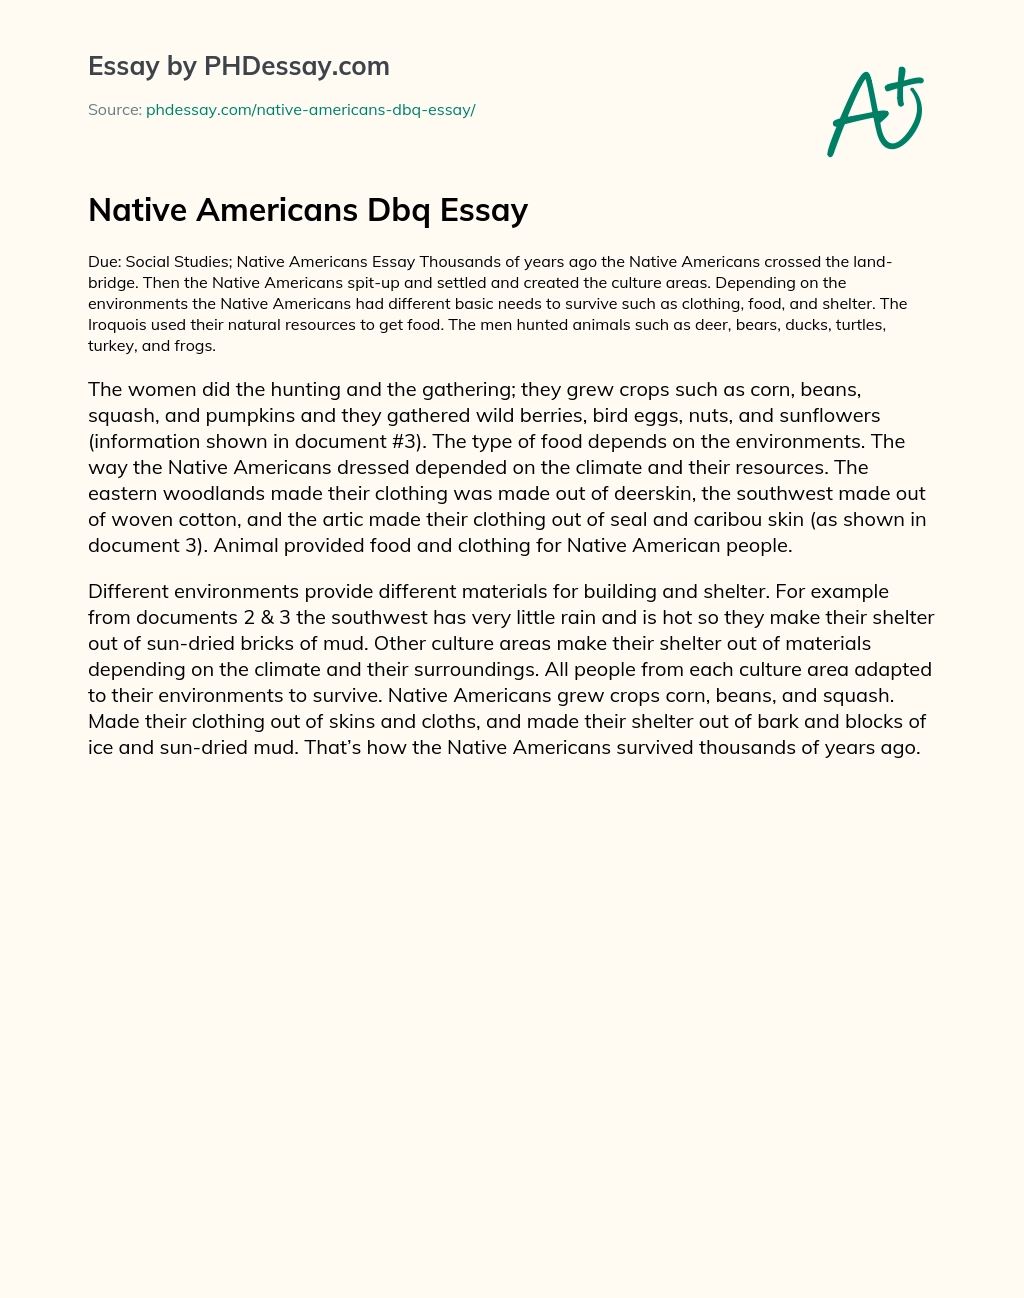 Native Americans Dbq Essay essay